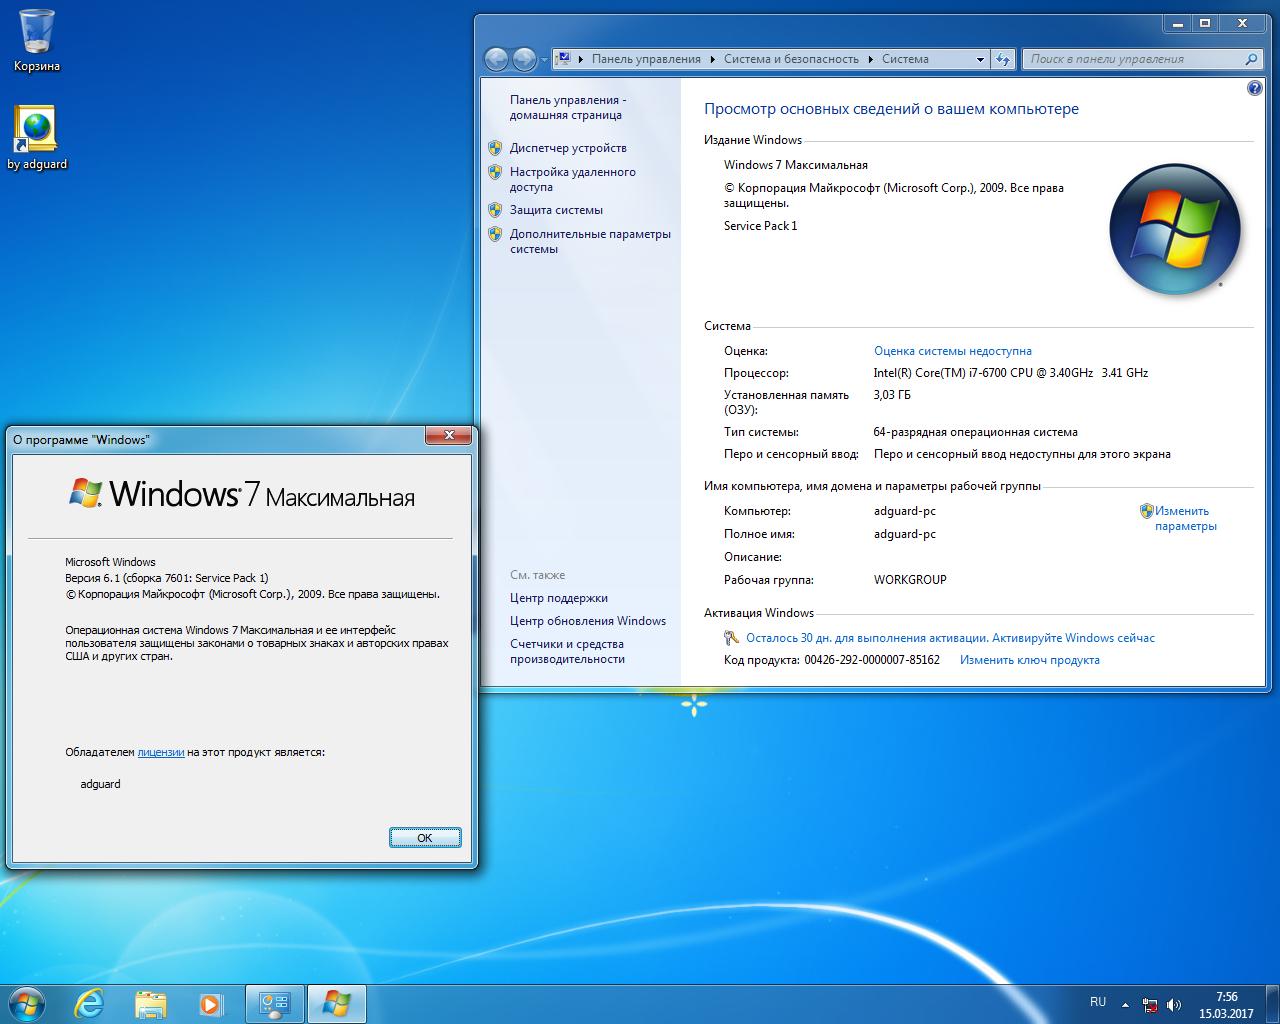 windows 7 ultimate sp1 64 bit product key free